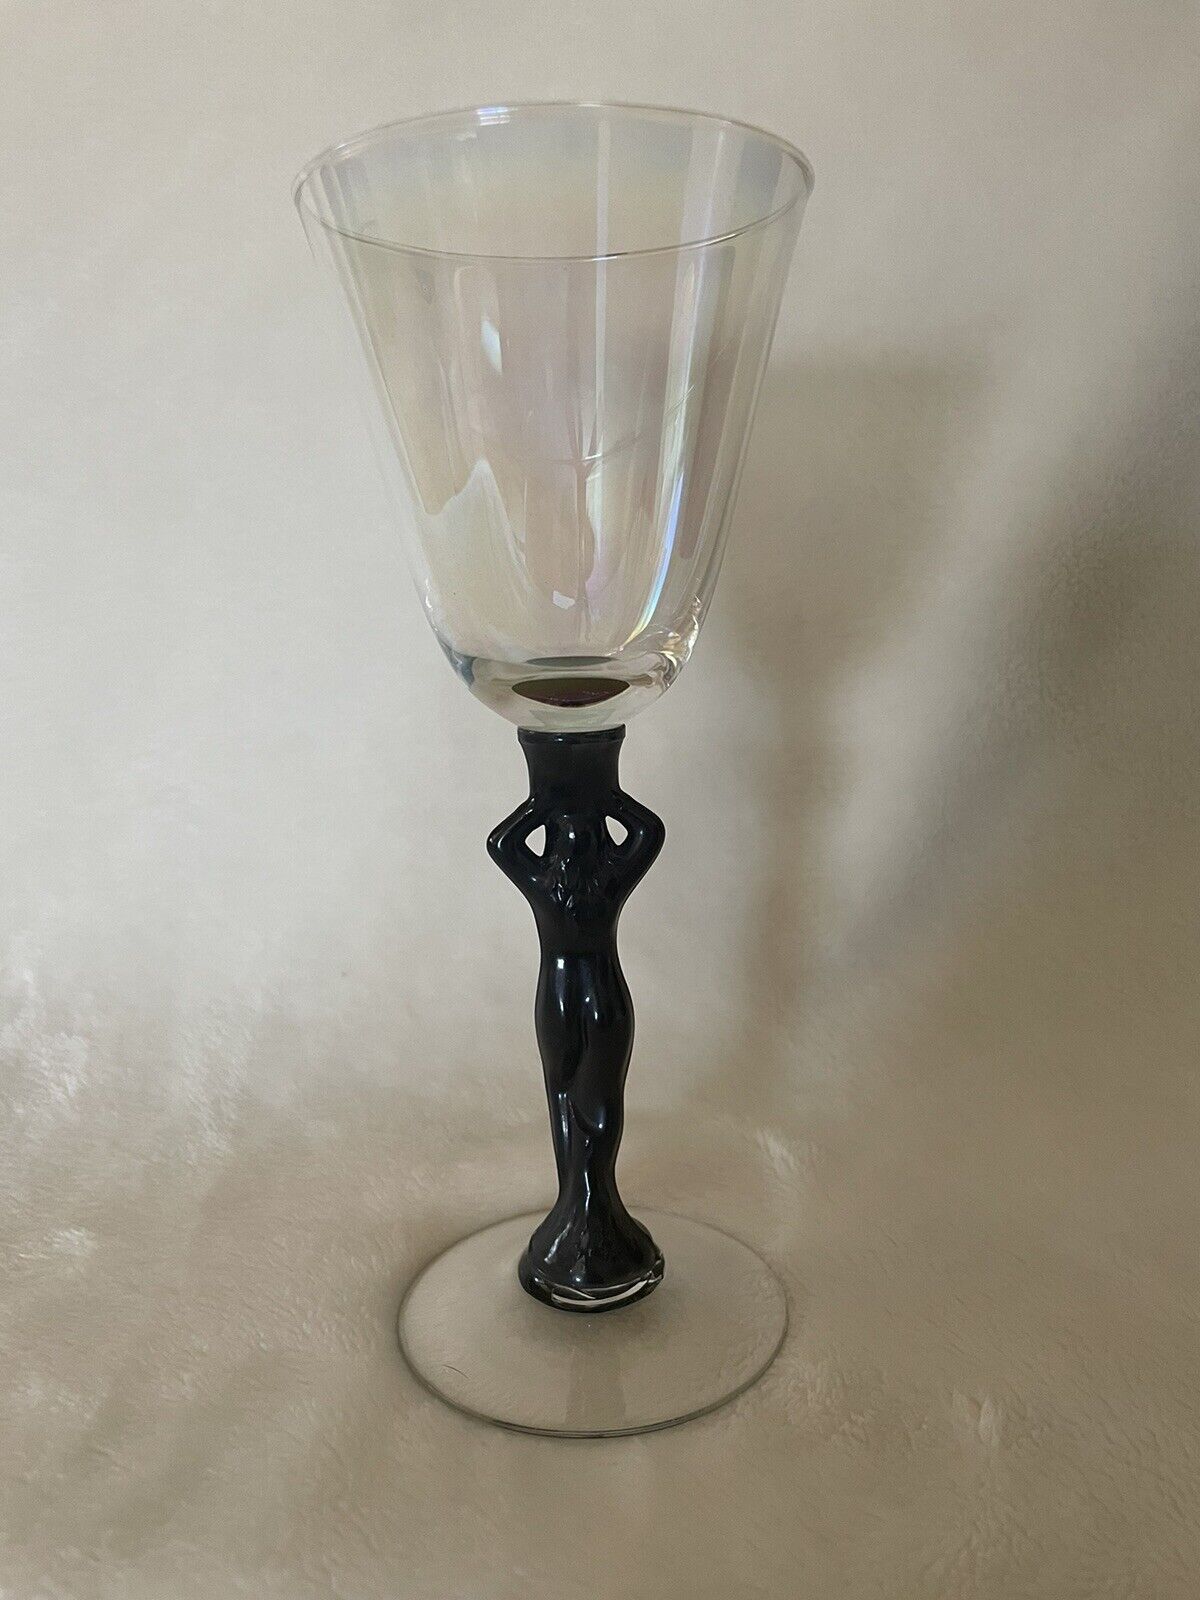 CAMBRIDGE Glass Company Ebony Black Statuesque goblet/wine glass Nude Stem